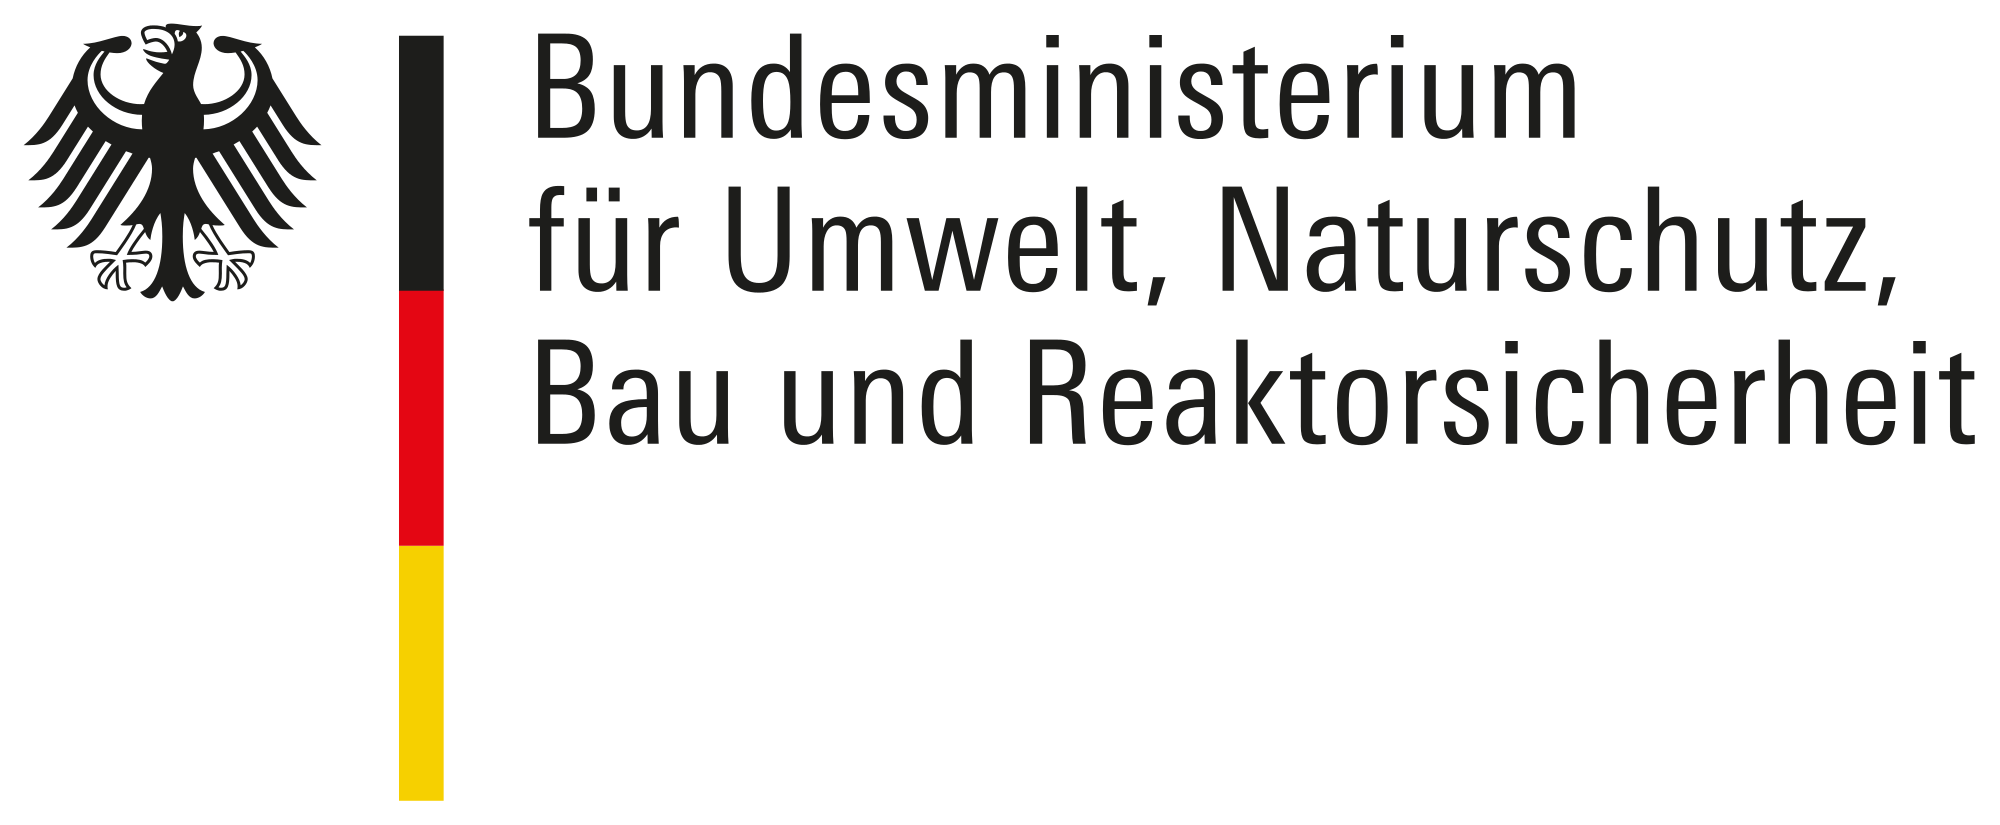 Logo BMU